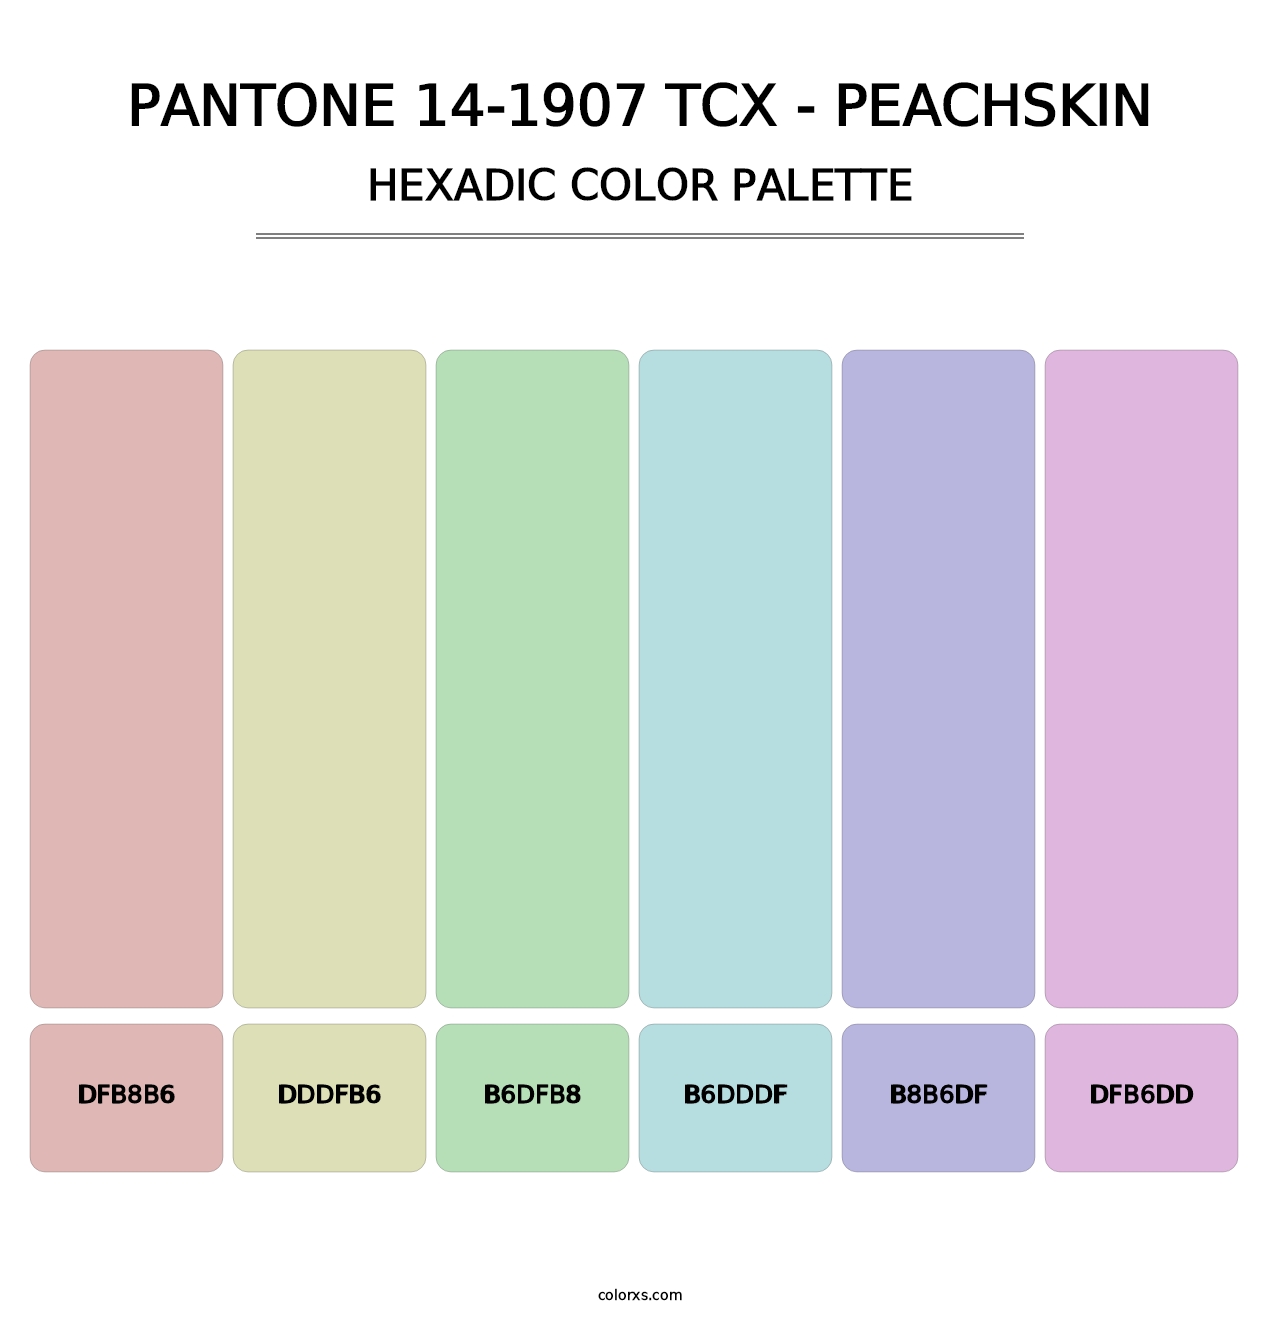 PANTONE 14-1907 TCX - Peachskin - Hexadic Color Palette